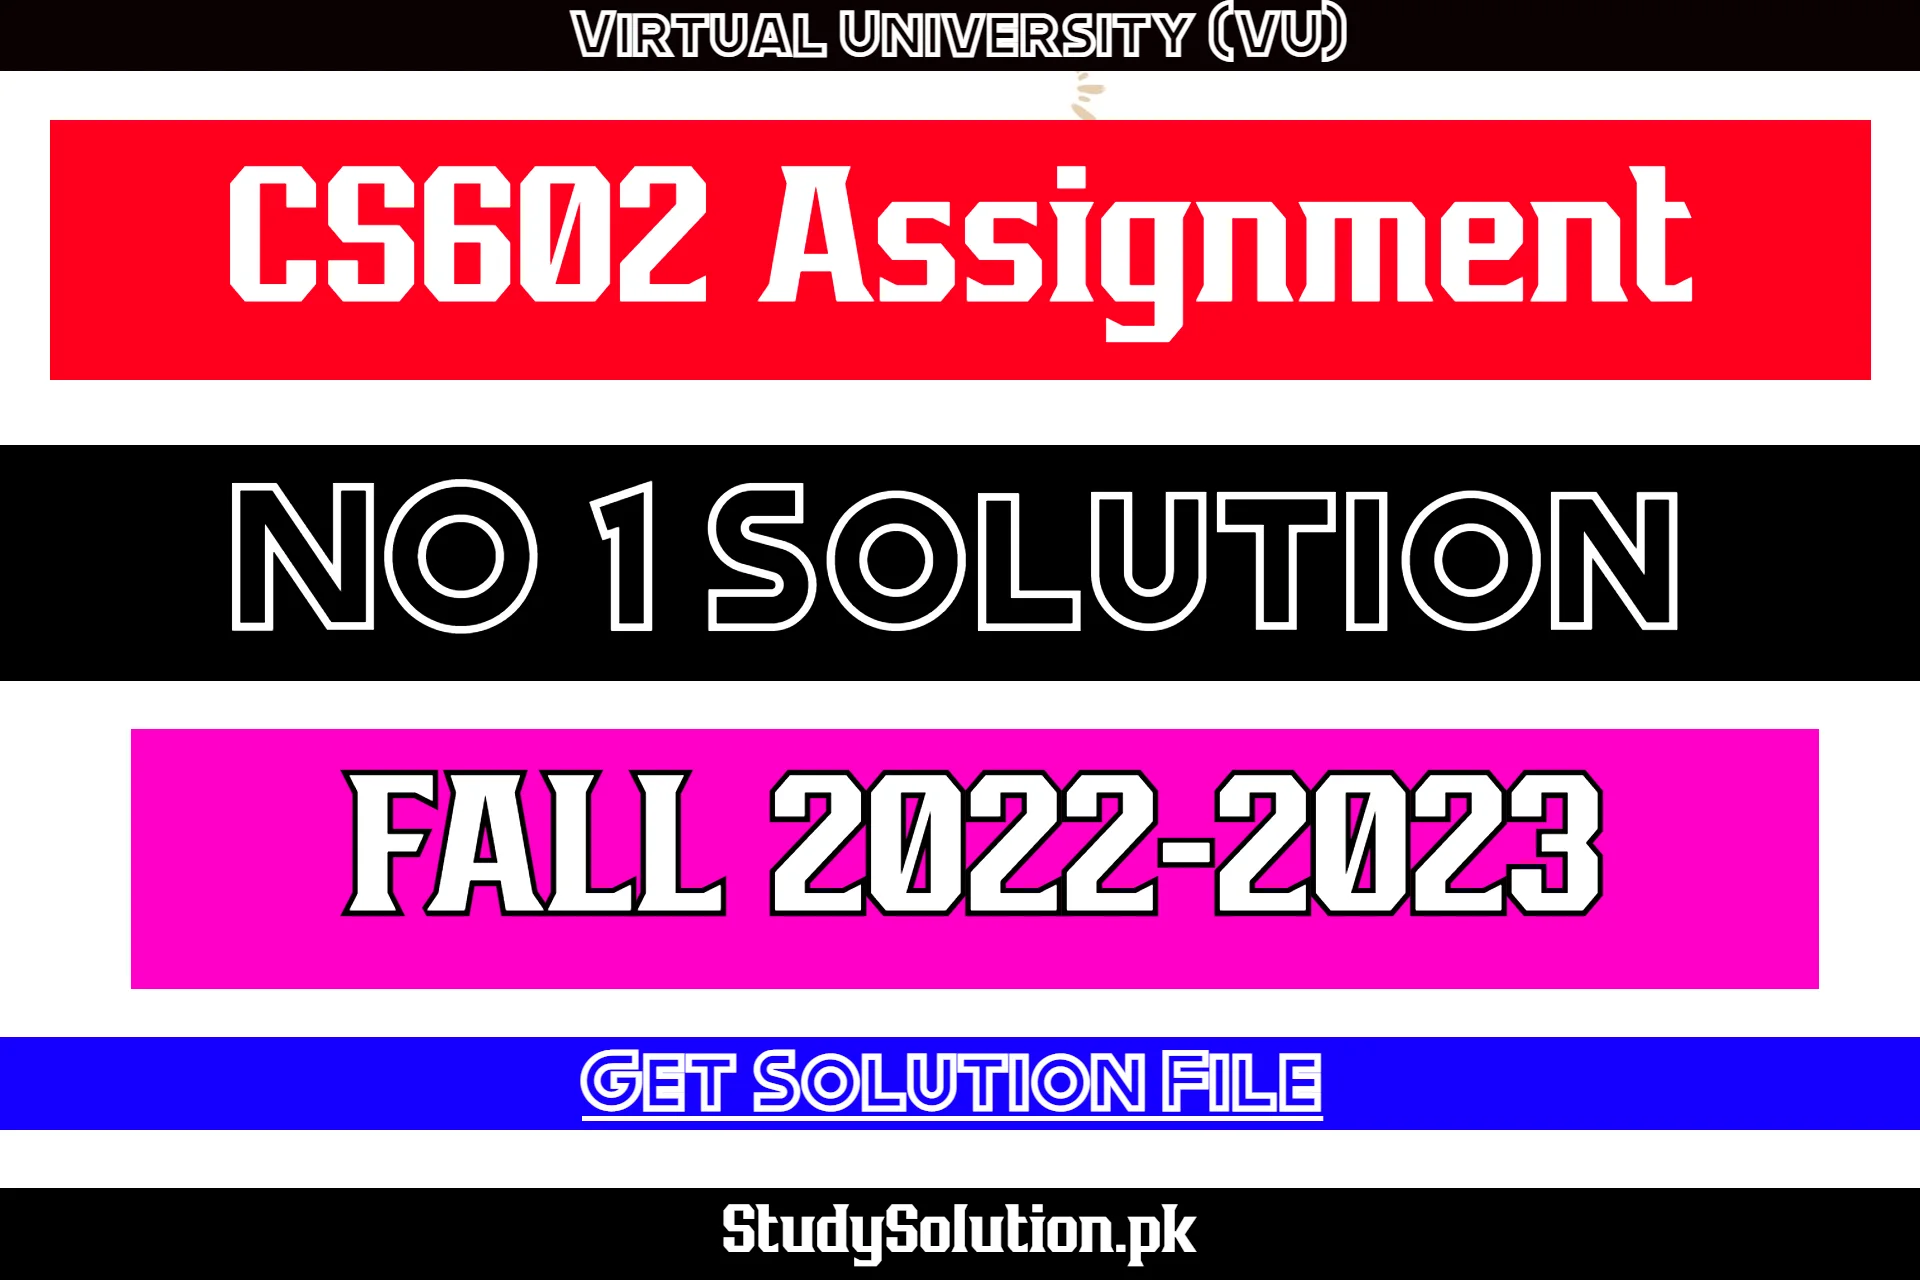 CS602 Assignment No 1 Solution Fall 2022